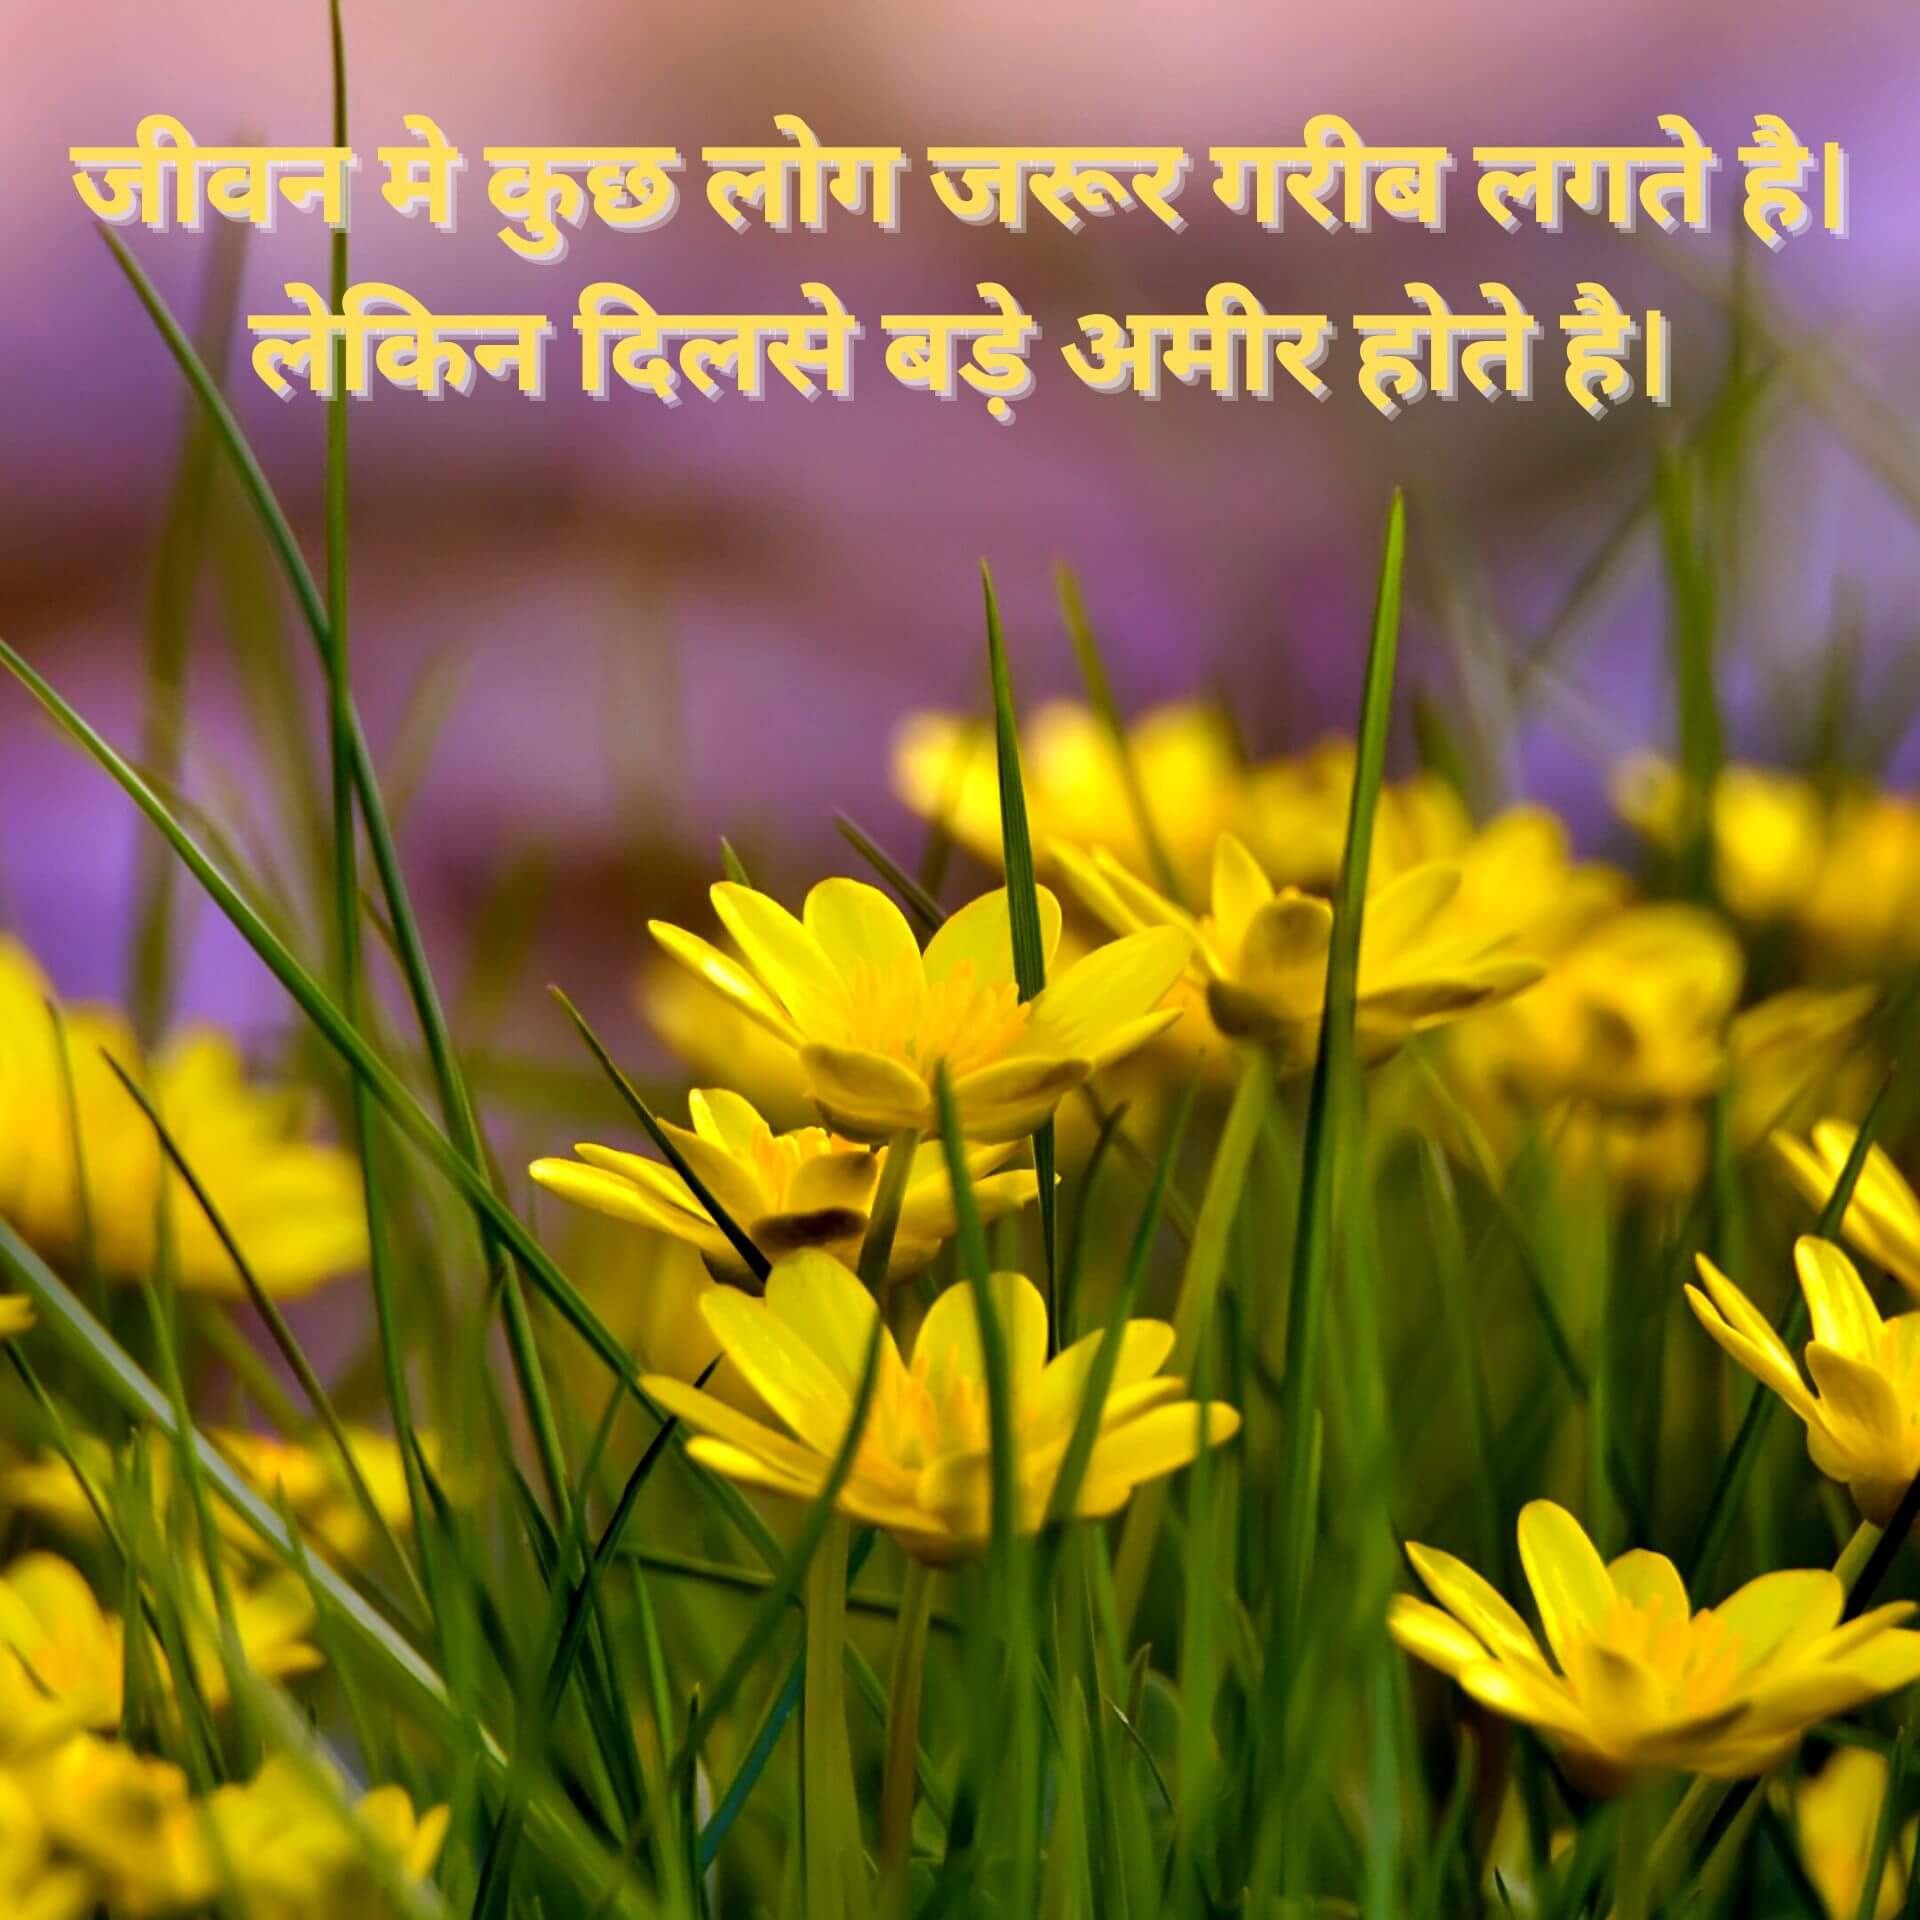 Hindi Motivational Quotes Pics Wallpaper Free Download